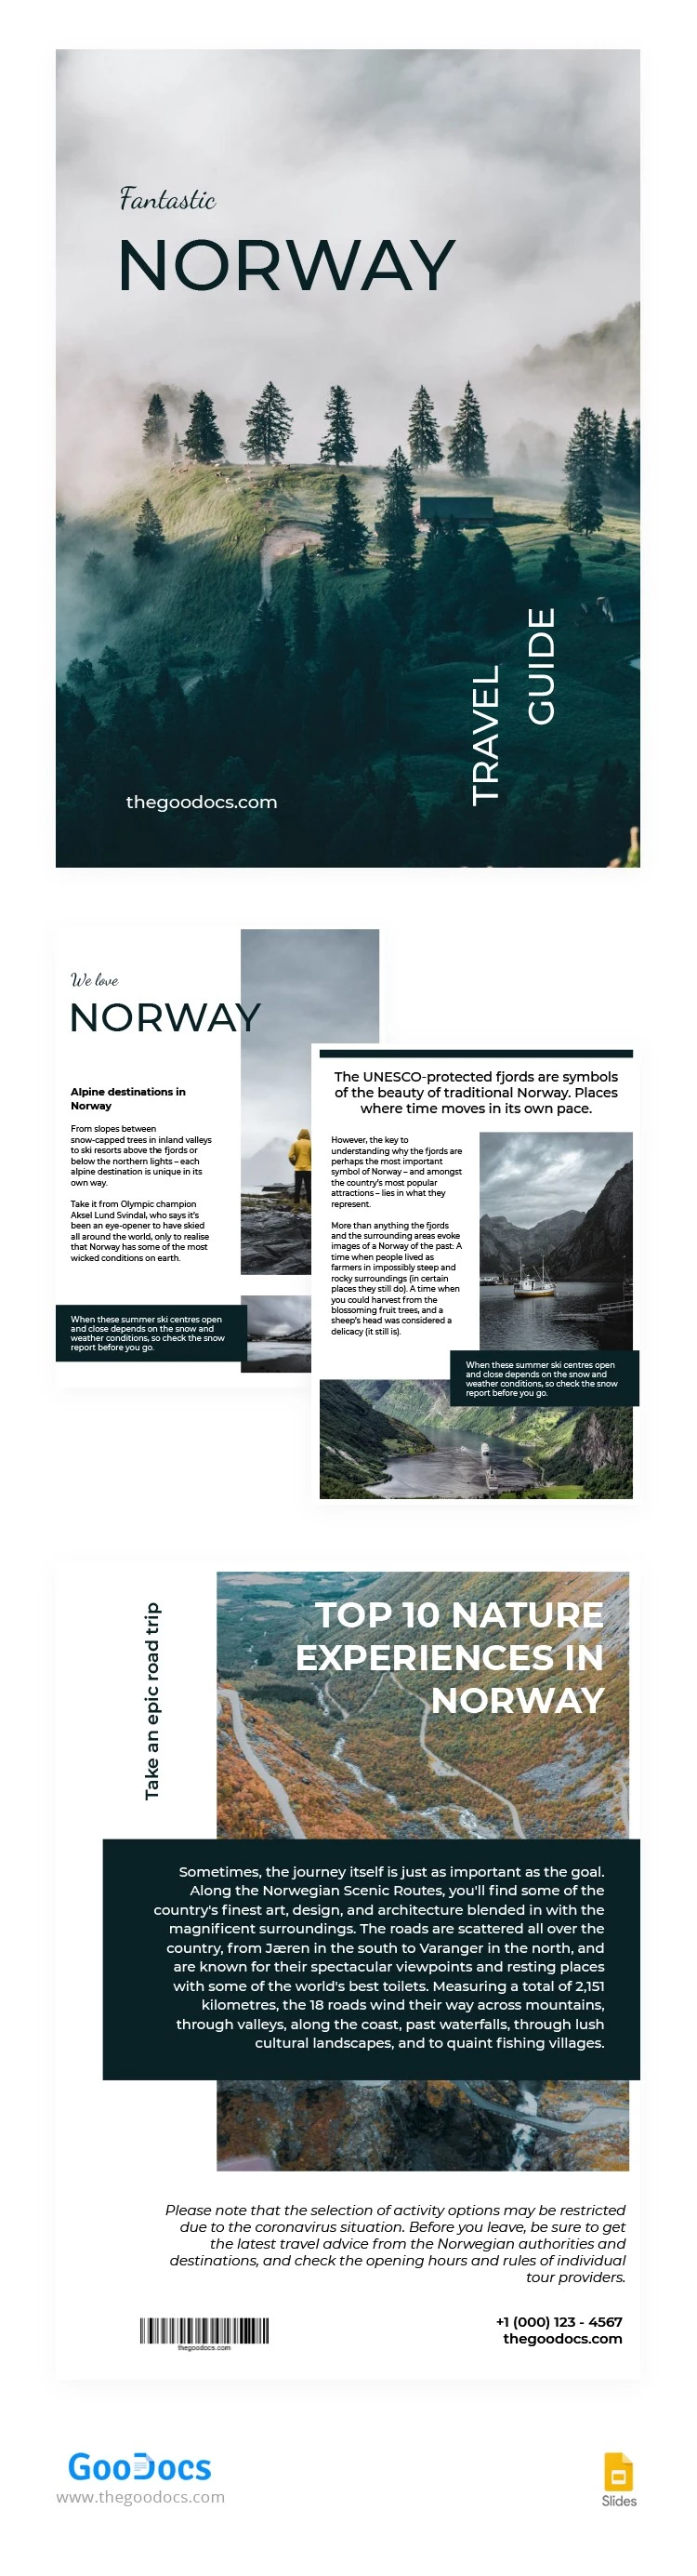 Fantastic Norway Book - free Google Docs Template - 10062805